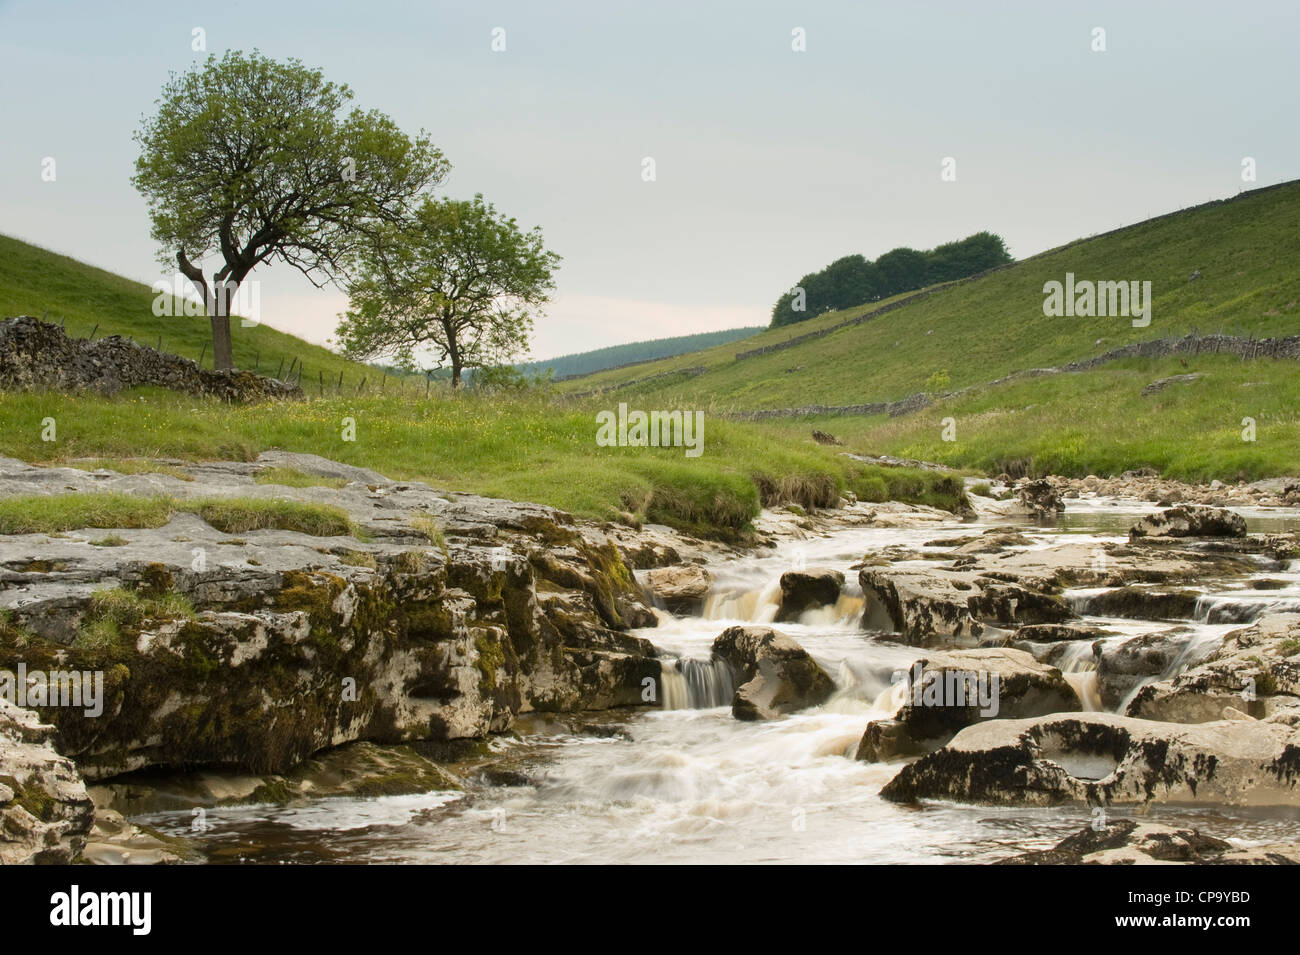 River Wharfe, fließt durch ruhigen malerischen engen v-förmiges Tal, Kaskadierung über Kalksteinfelsen - Langstrothdale, Yorkshire Dales, England, UK. Stockfoto